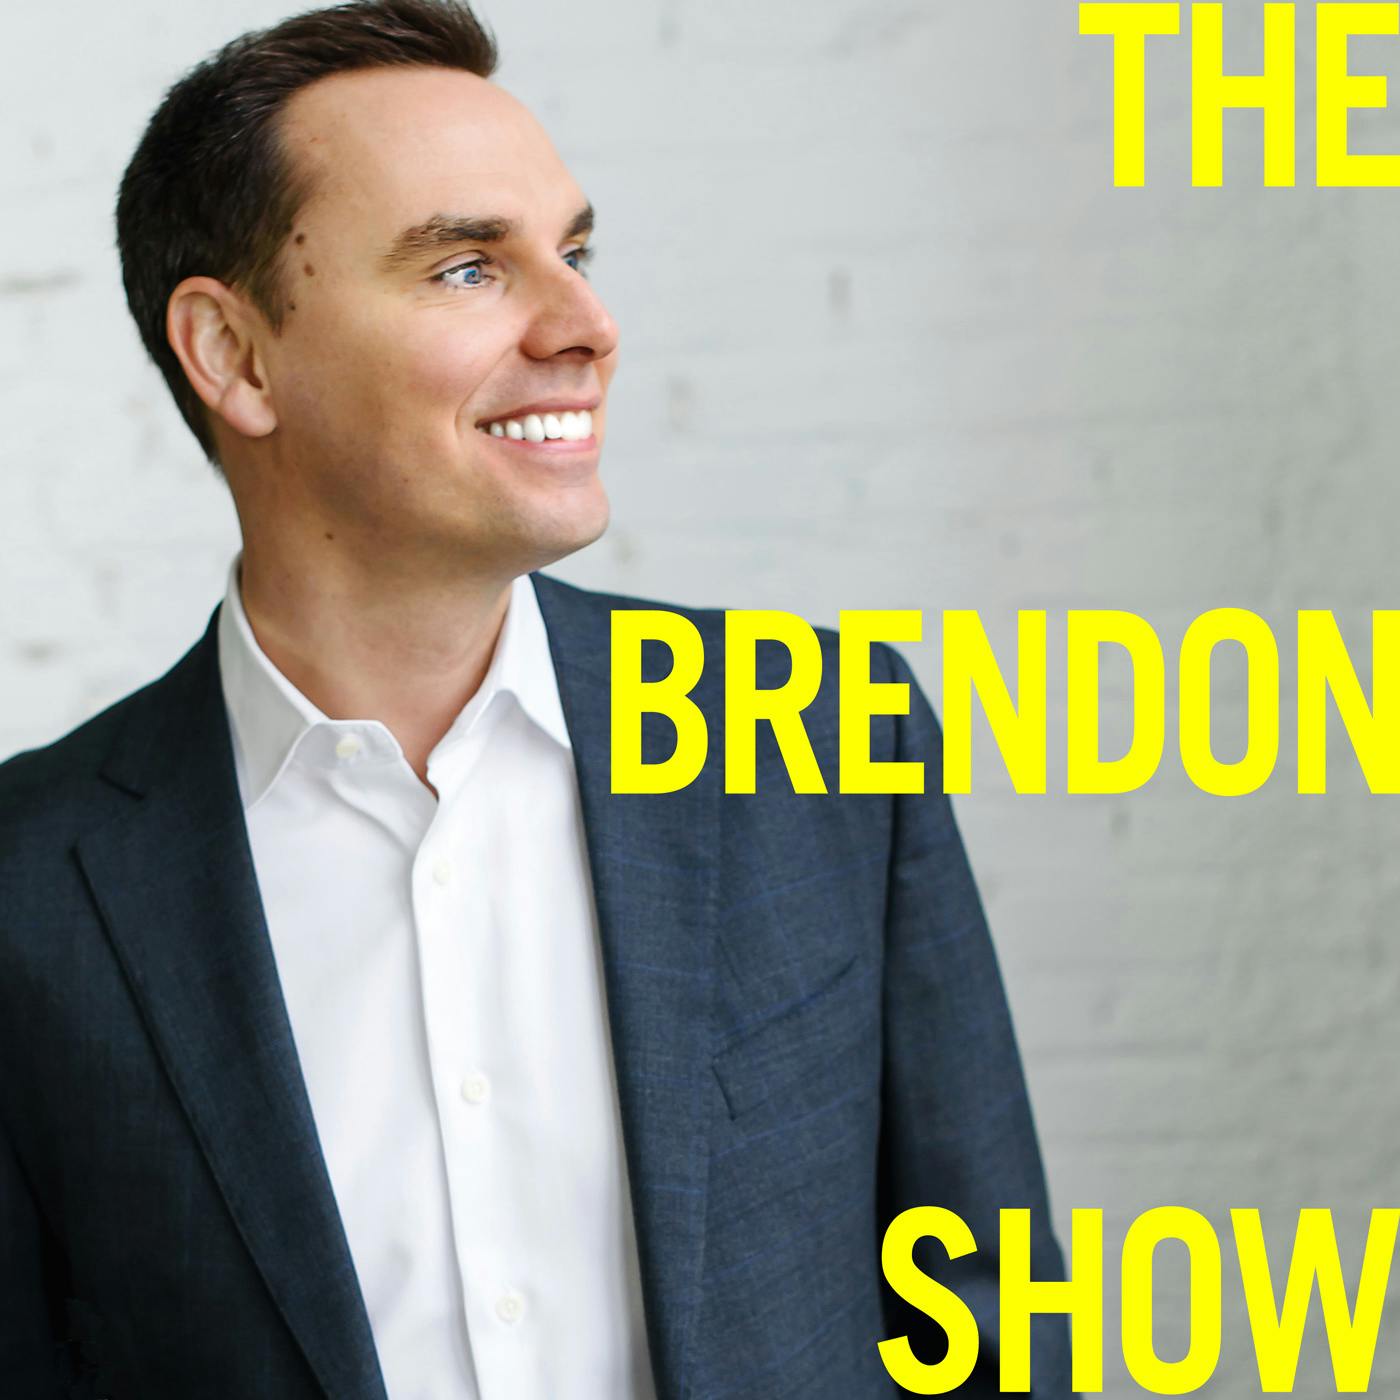 Influencer Series: Behind Brendon's Career (Part 2 of 2)